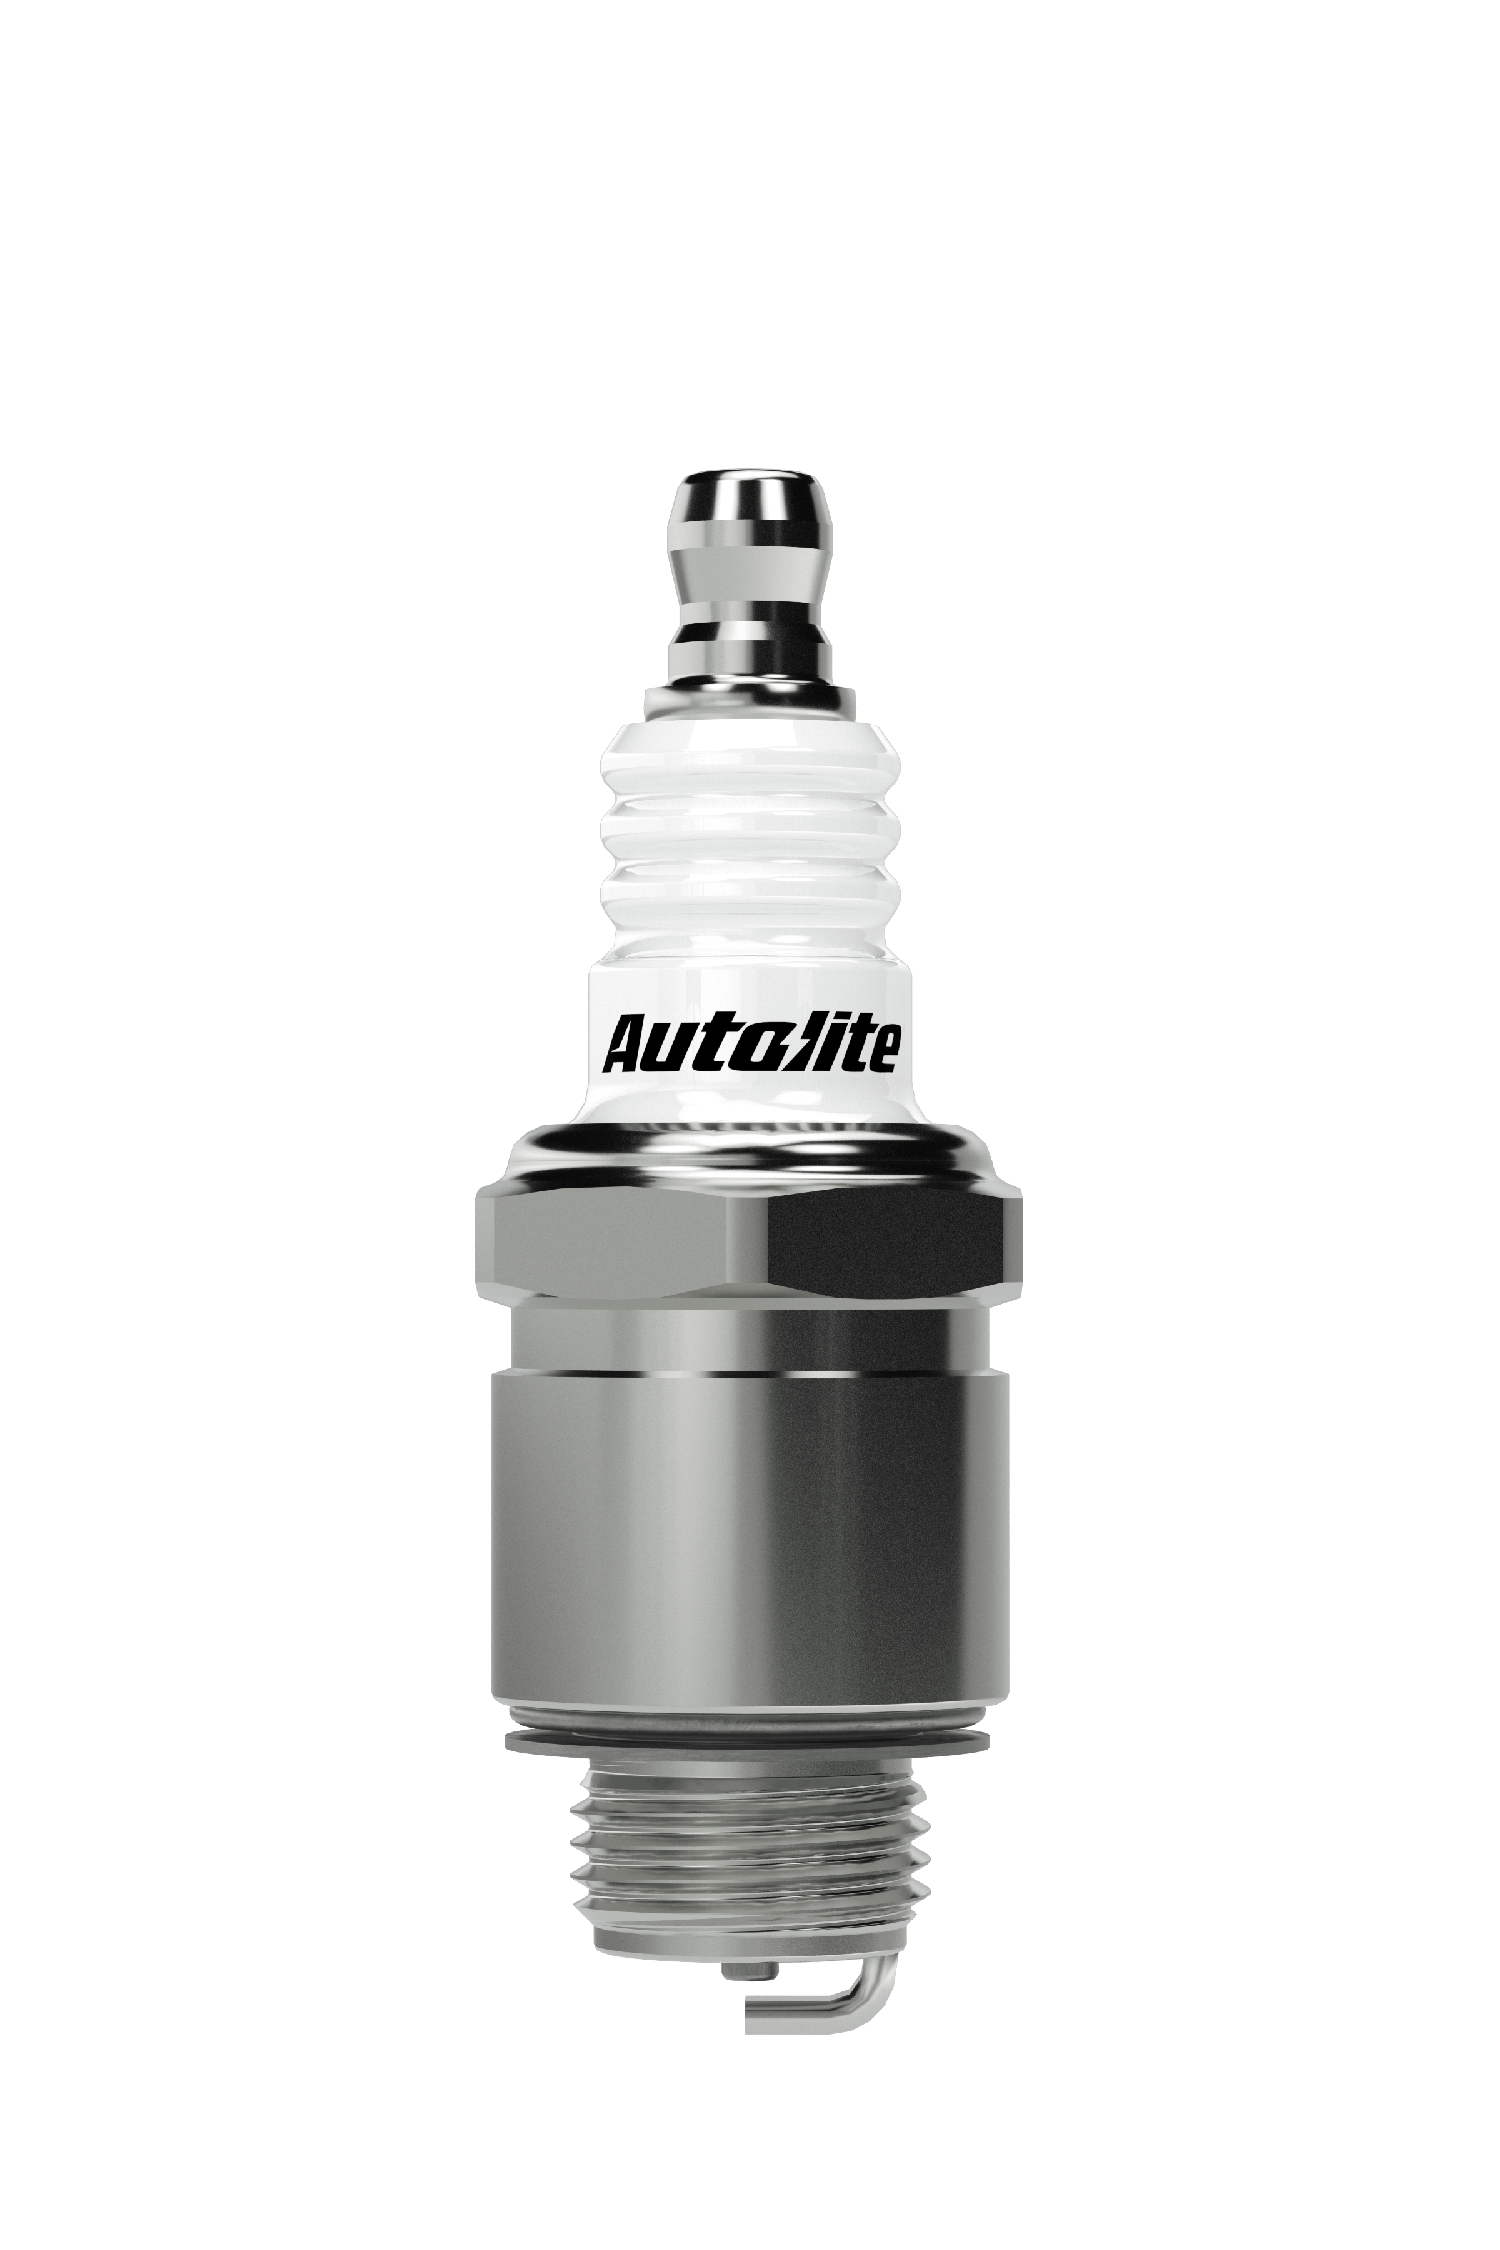 Autolite Small Engine	Spark Plugs